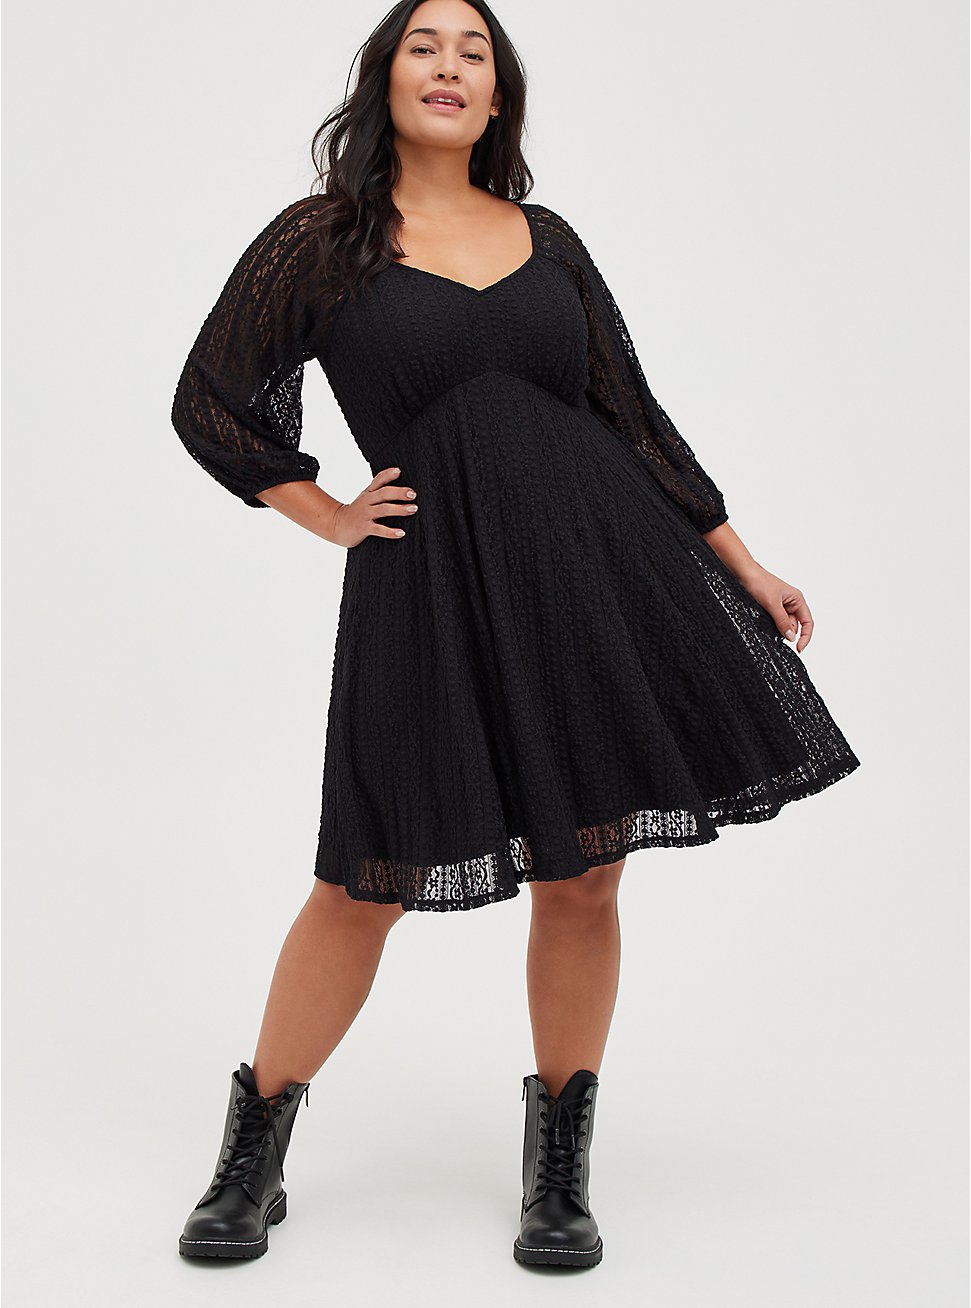 Plus Size Fit & Flare Mini Dress - Lace Black, DEEP BLACK, hi-res